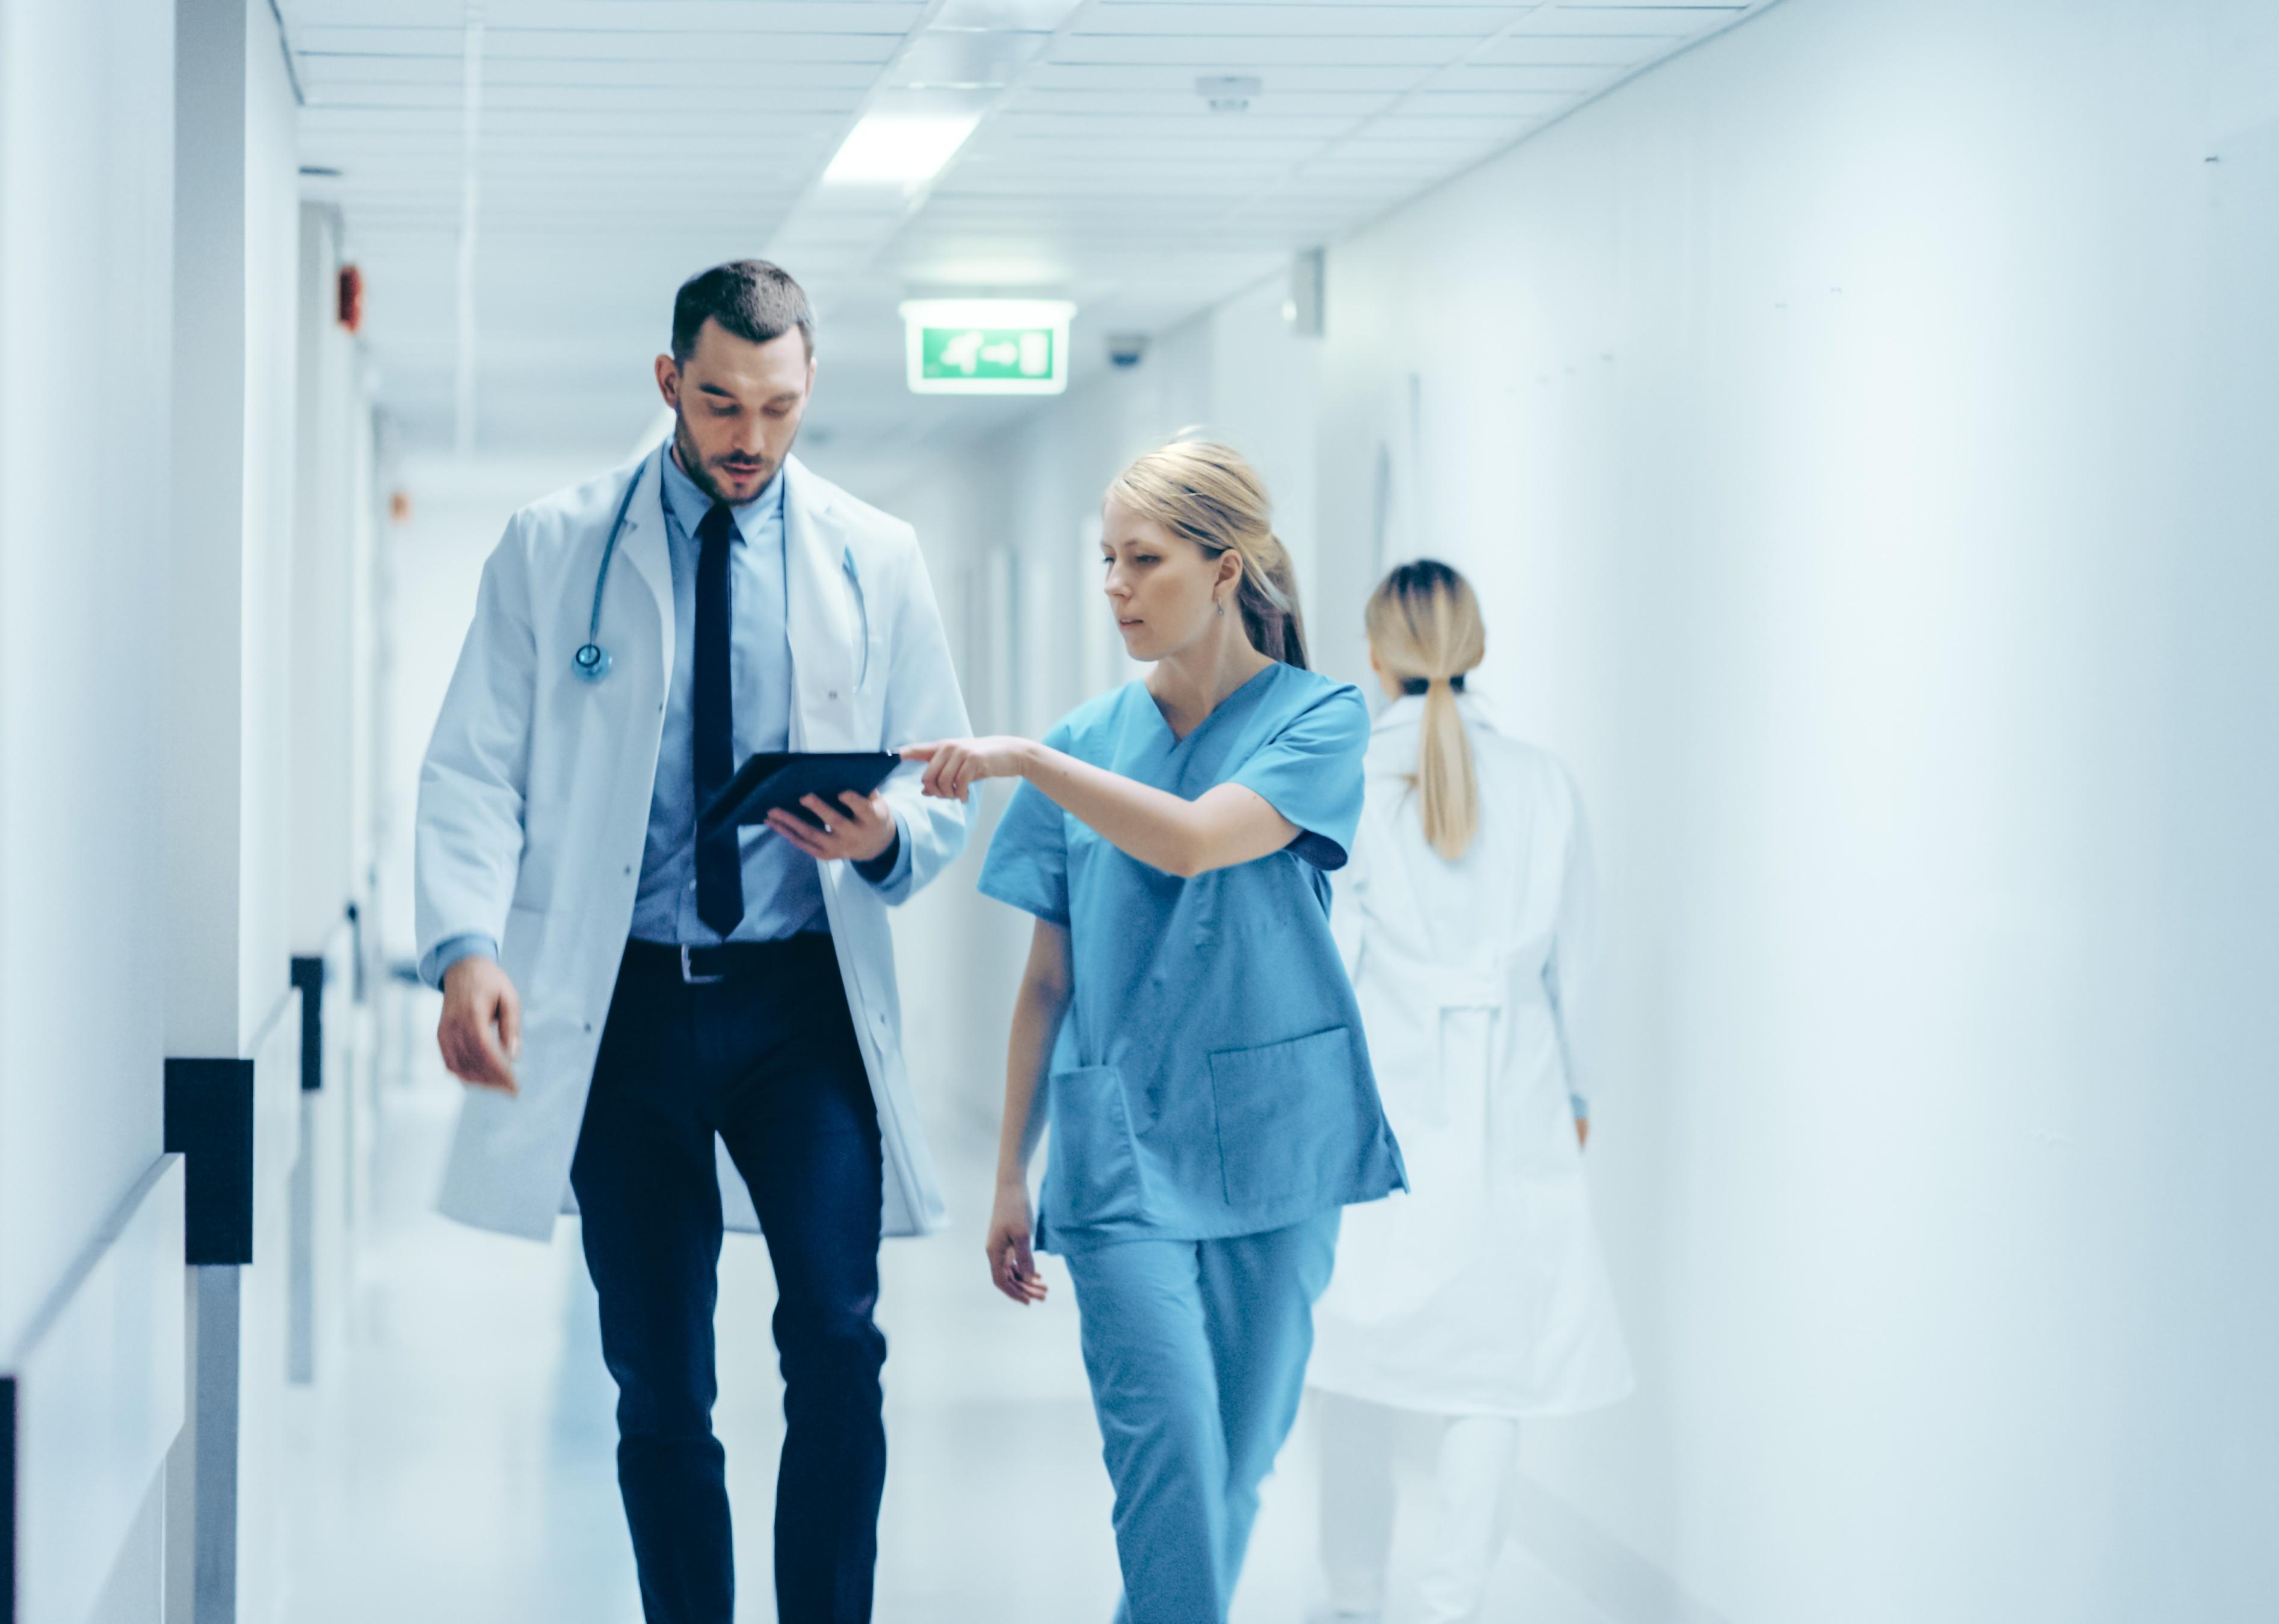 A doctor and nurse walk through a hospital.